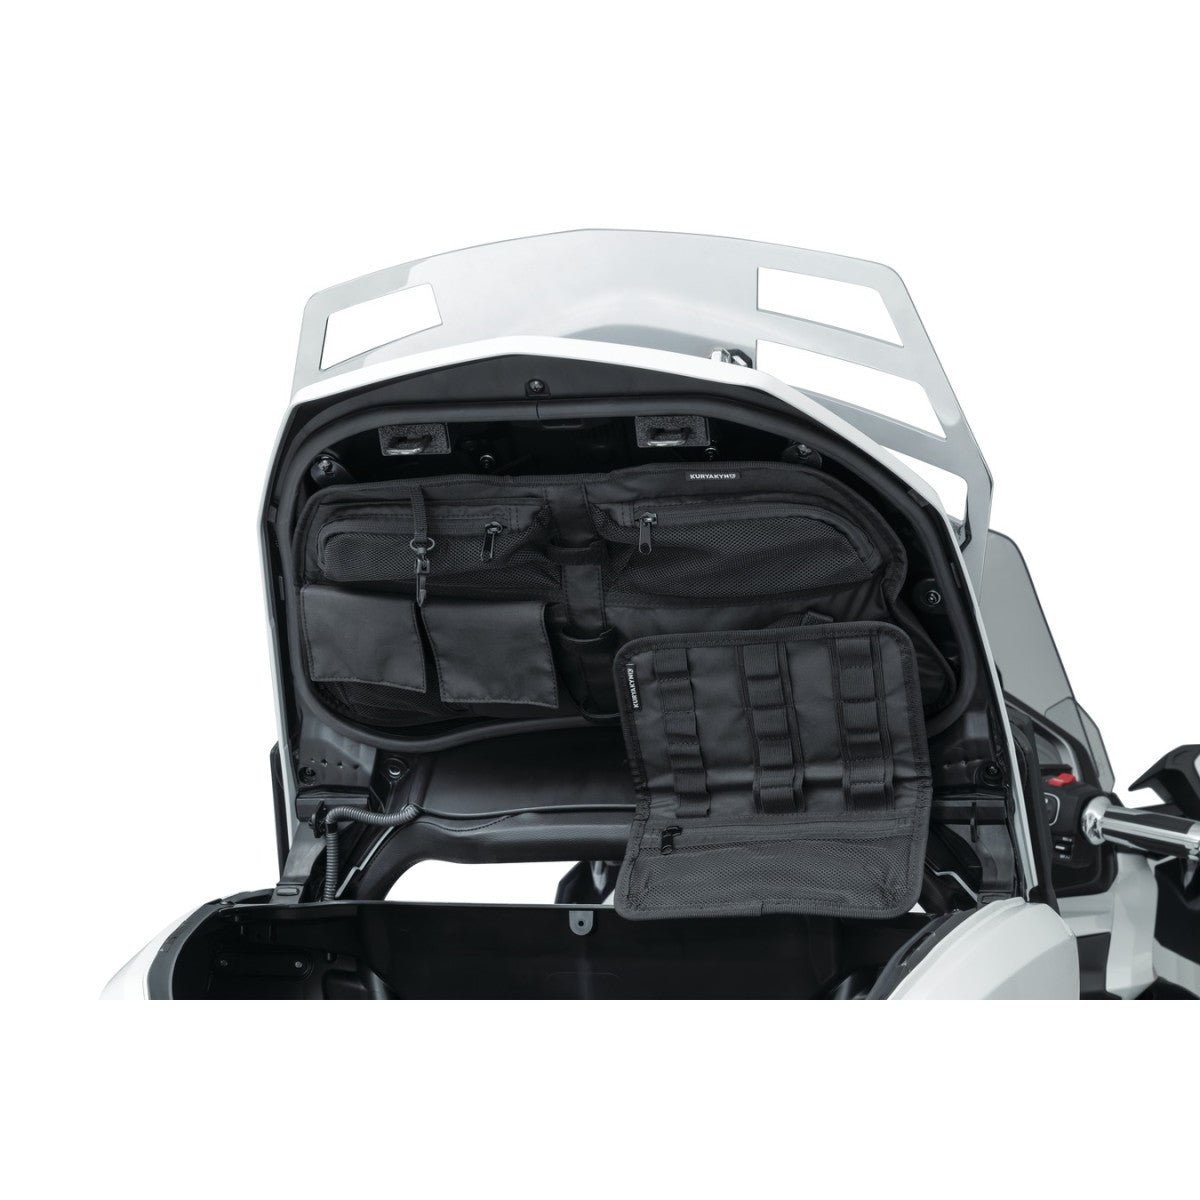 Kofferbak deksel organizer tas voor Honda Gl1800 gouden vleugel modellen 18-20